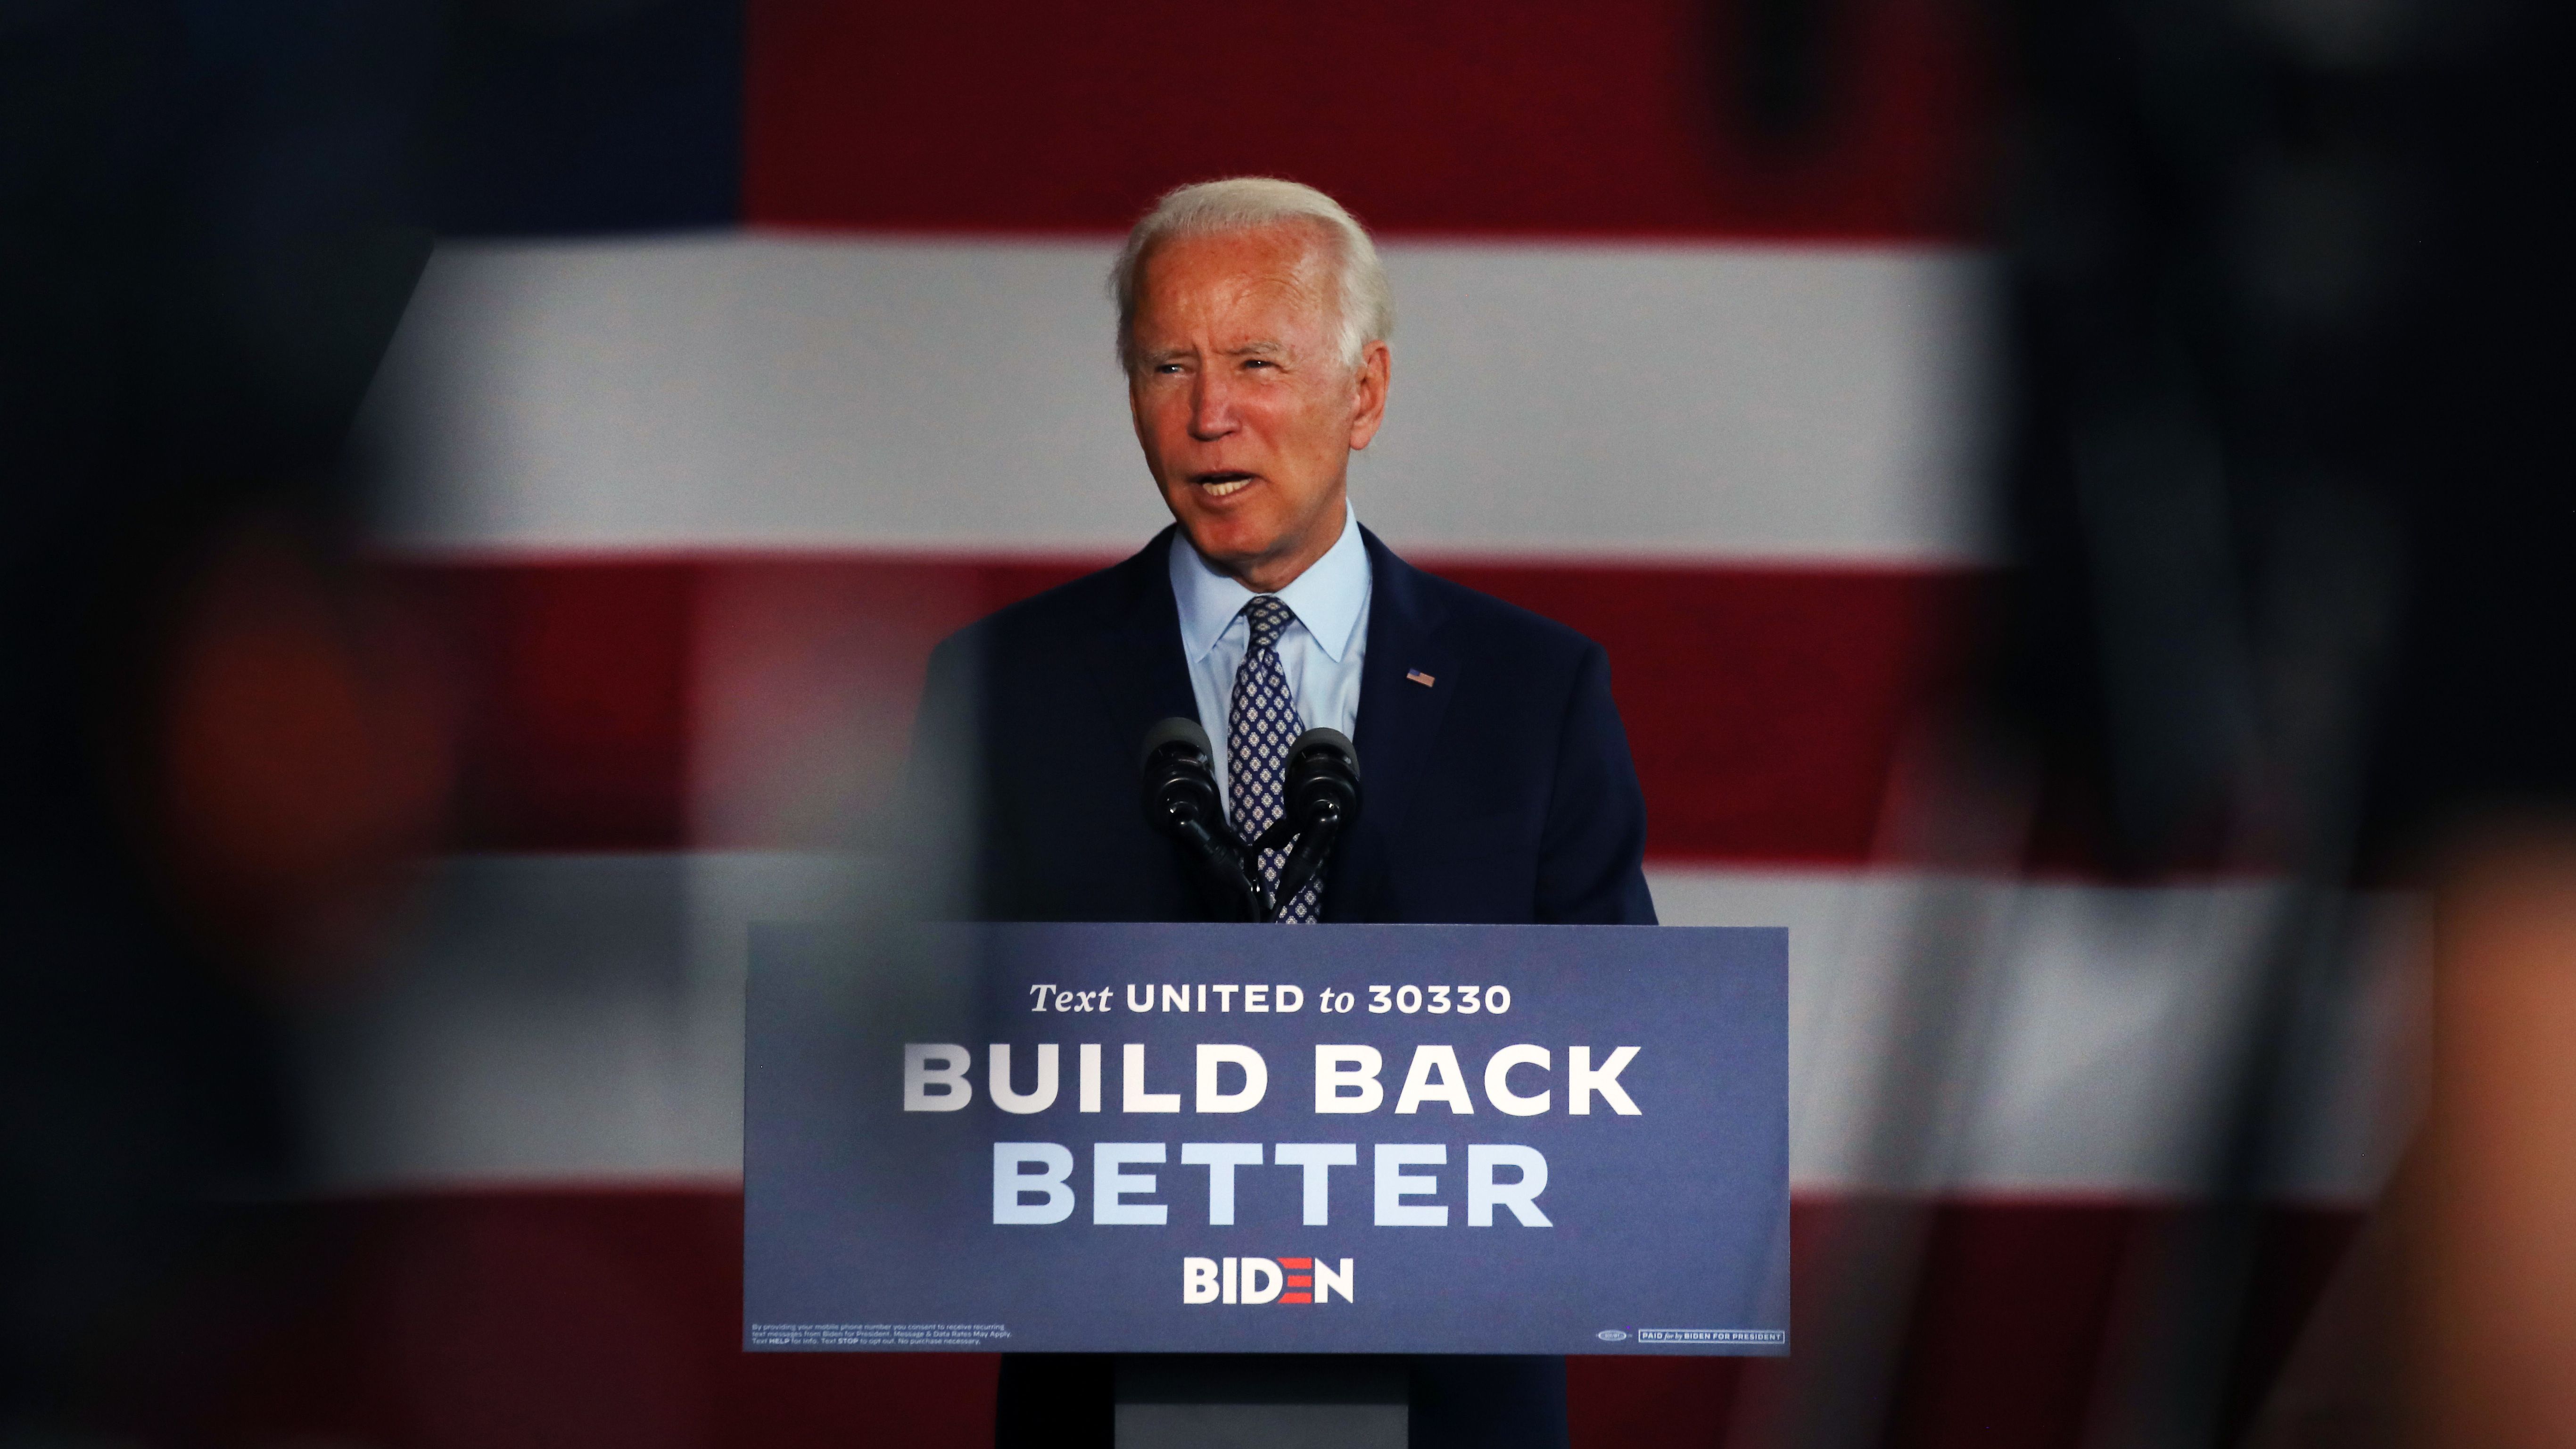 Build Back Better': Joe Biden Outlines Economic Recovery Plan